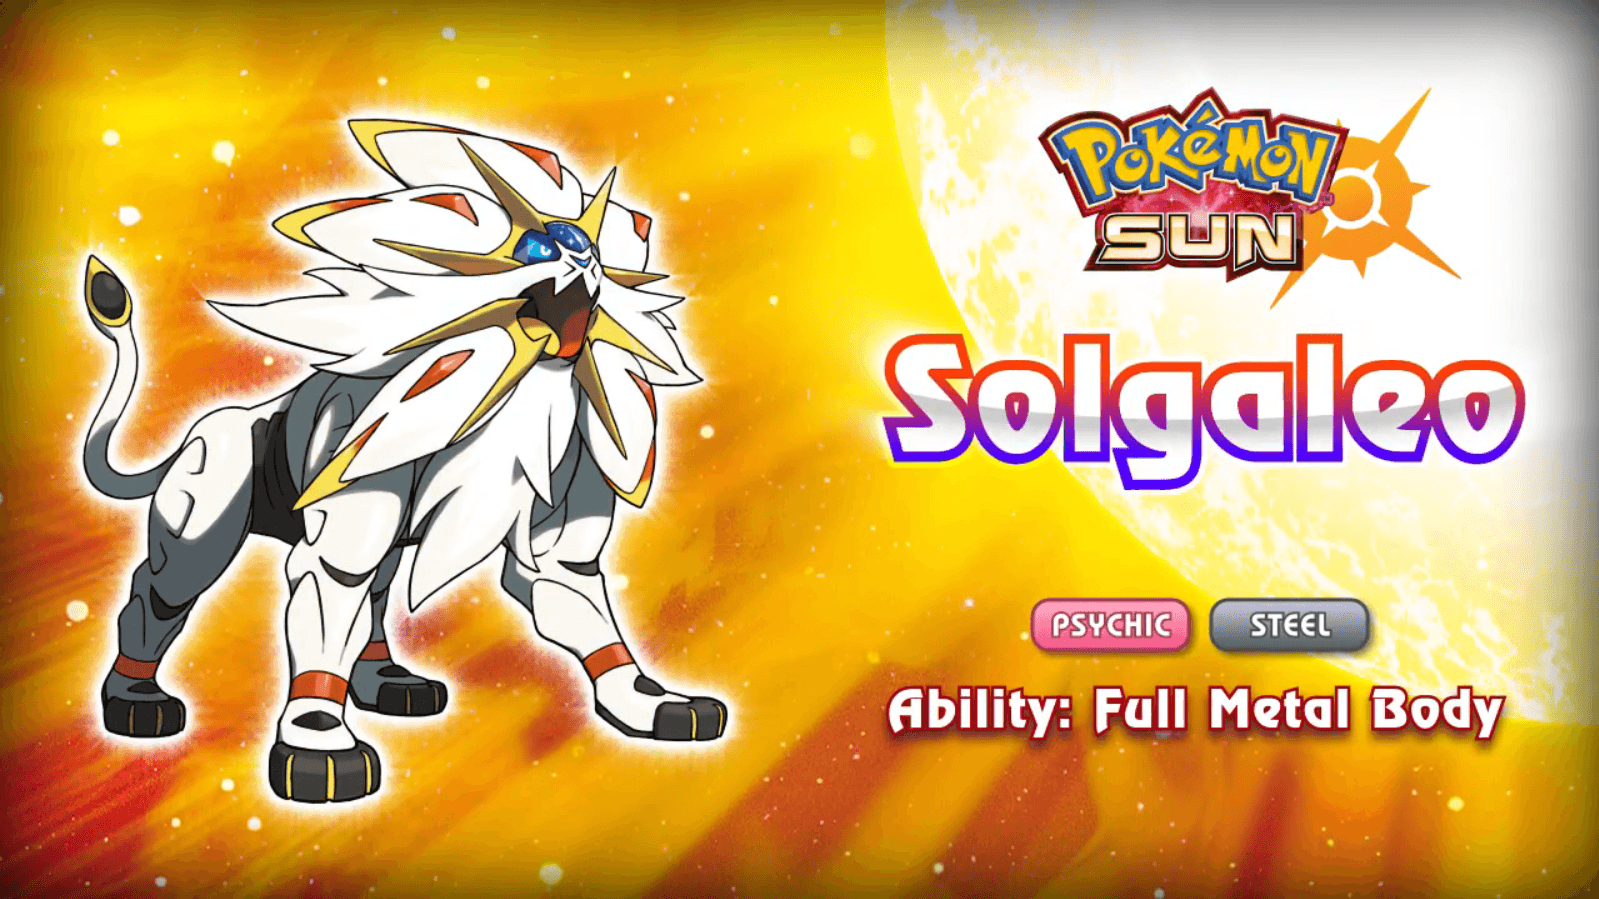 Types and ability revealed. Pokémon